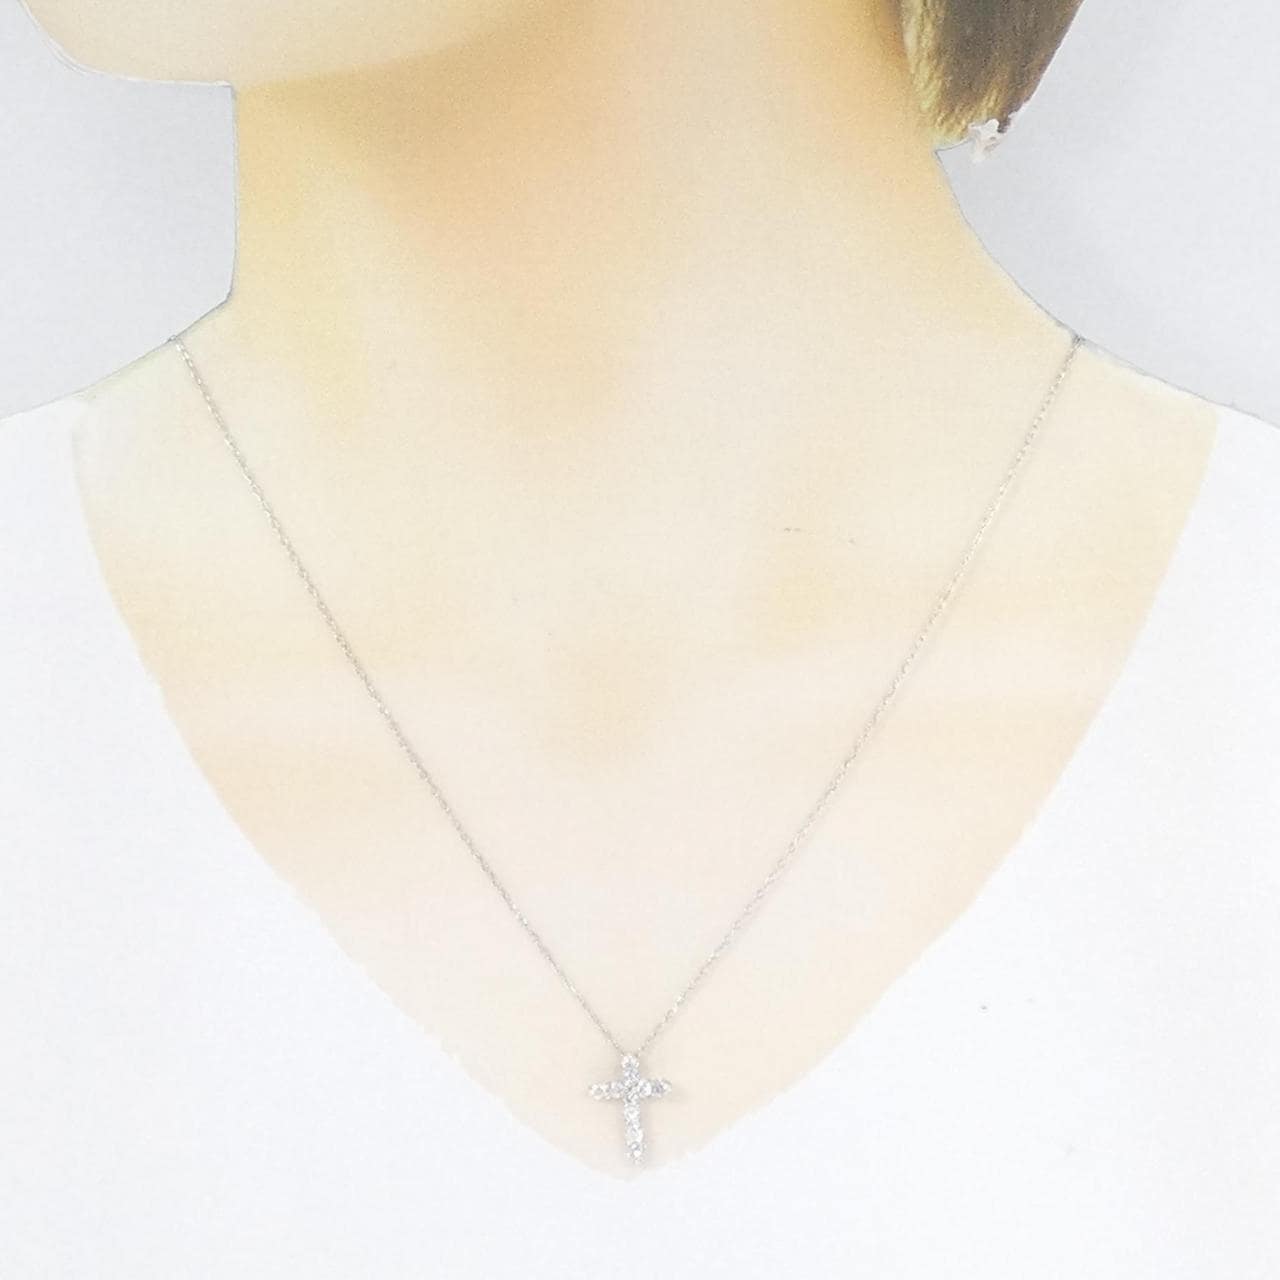 PT cross Diamond necklace